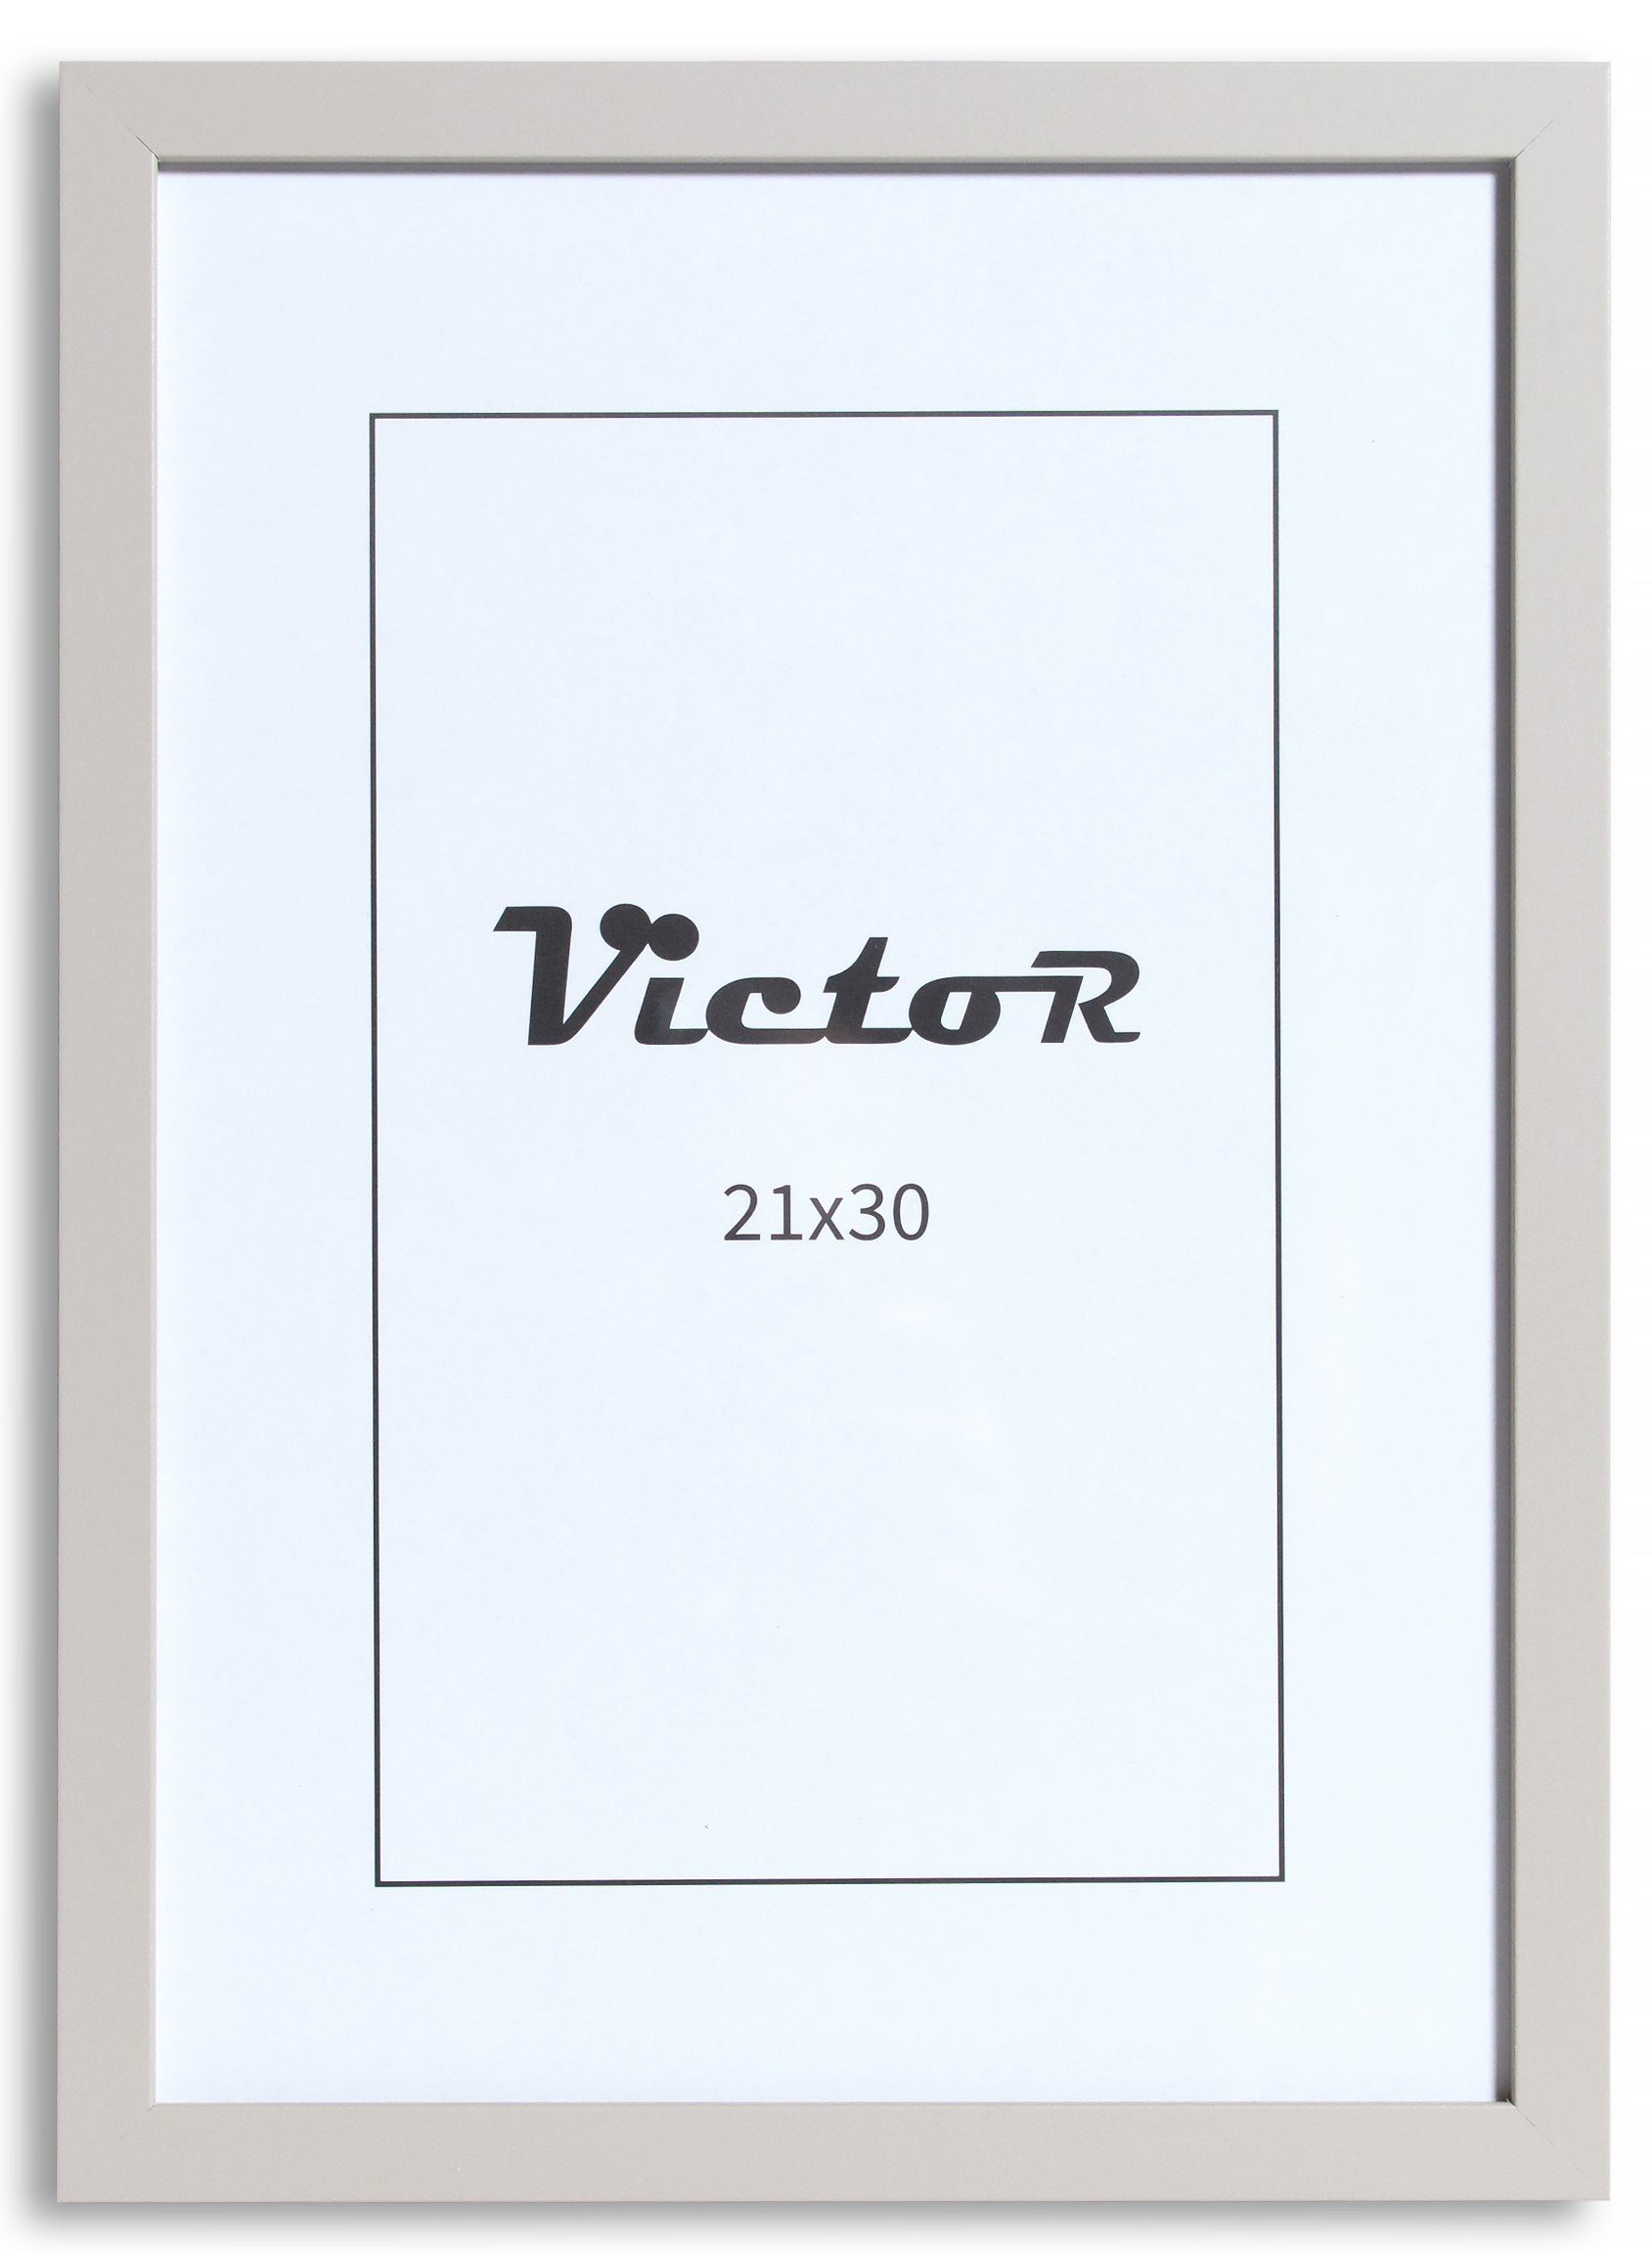 Victor (Zenith) Bilderrahmen Bilderrahmen "Klee" - Farbe: Grau - Größe: 21 x 30 cm, Bilderrahmen Grau 21x30 cm (A4), Bilderrahmen Modern